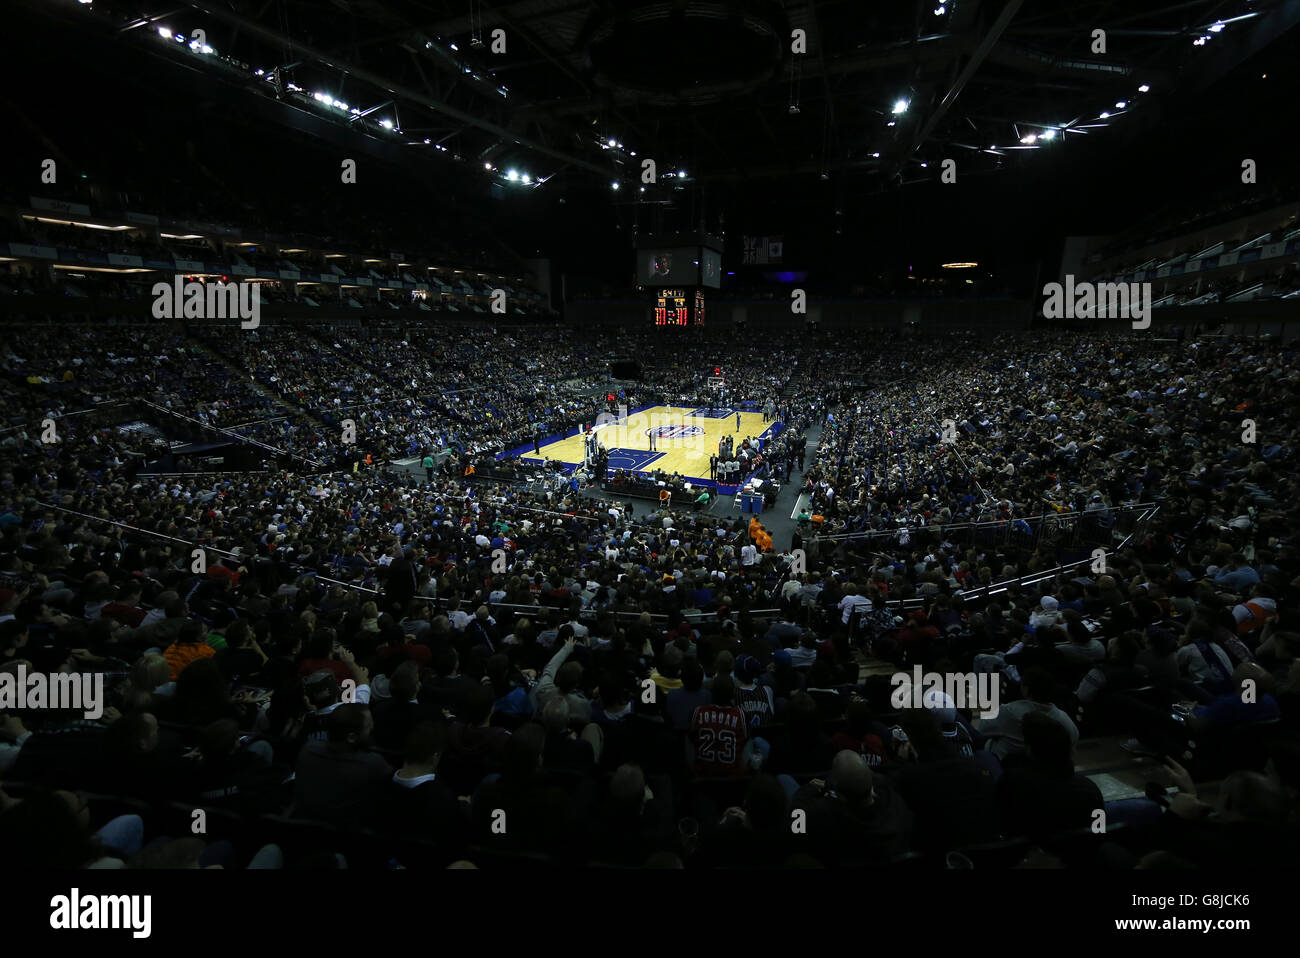 Orlando Magic v Toronto Raptors - NBA Global Games - O2 Arena Stock Photo